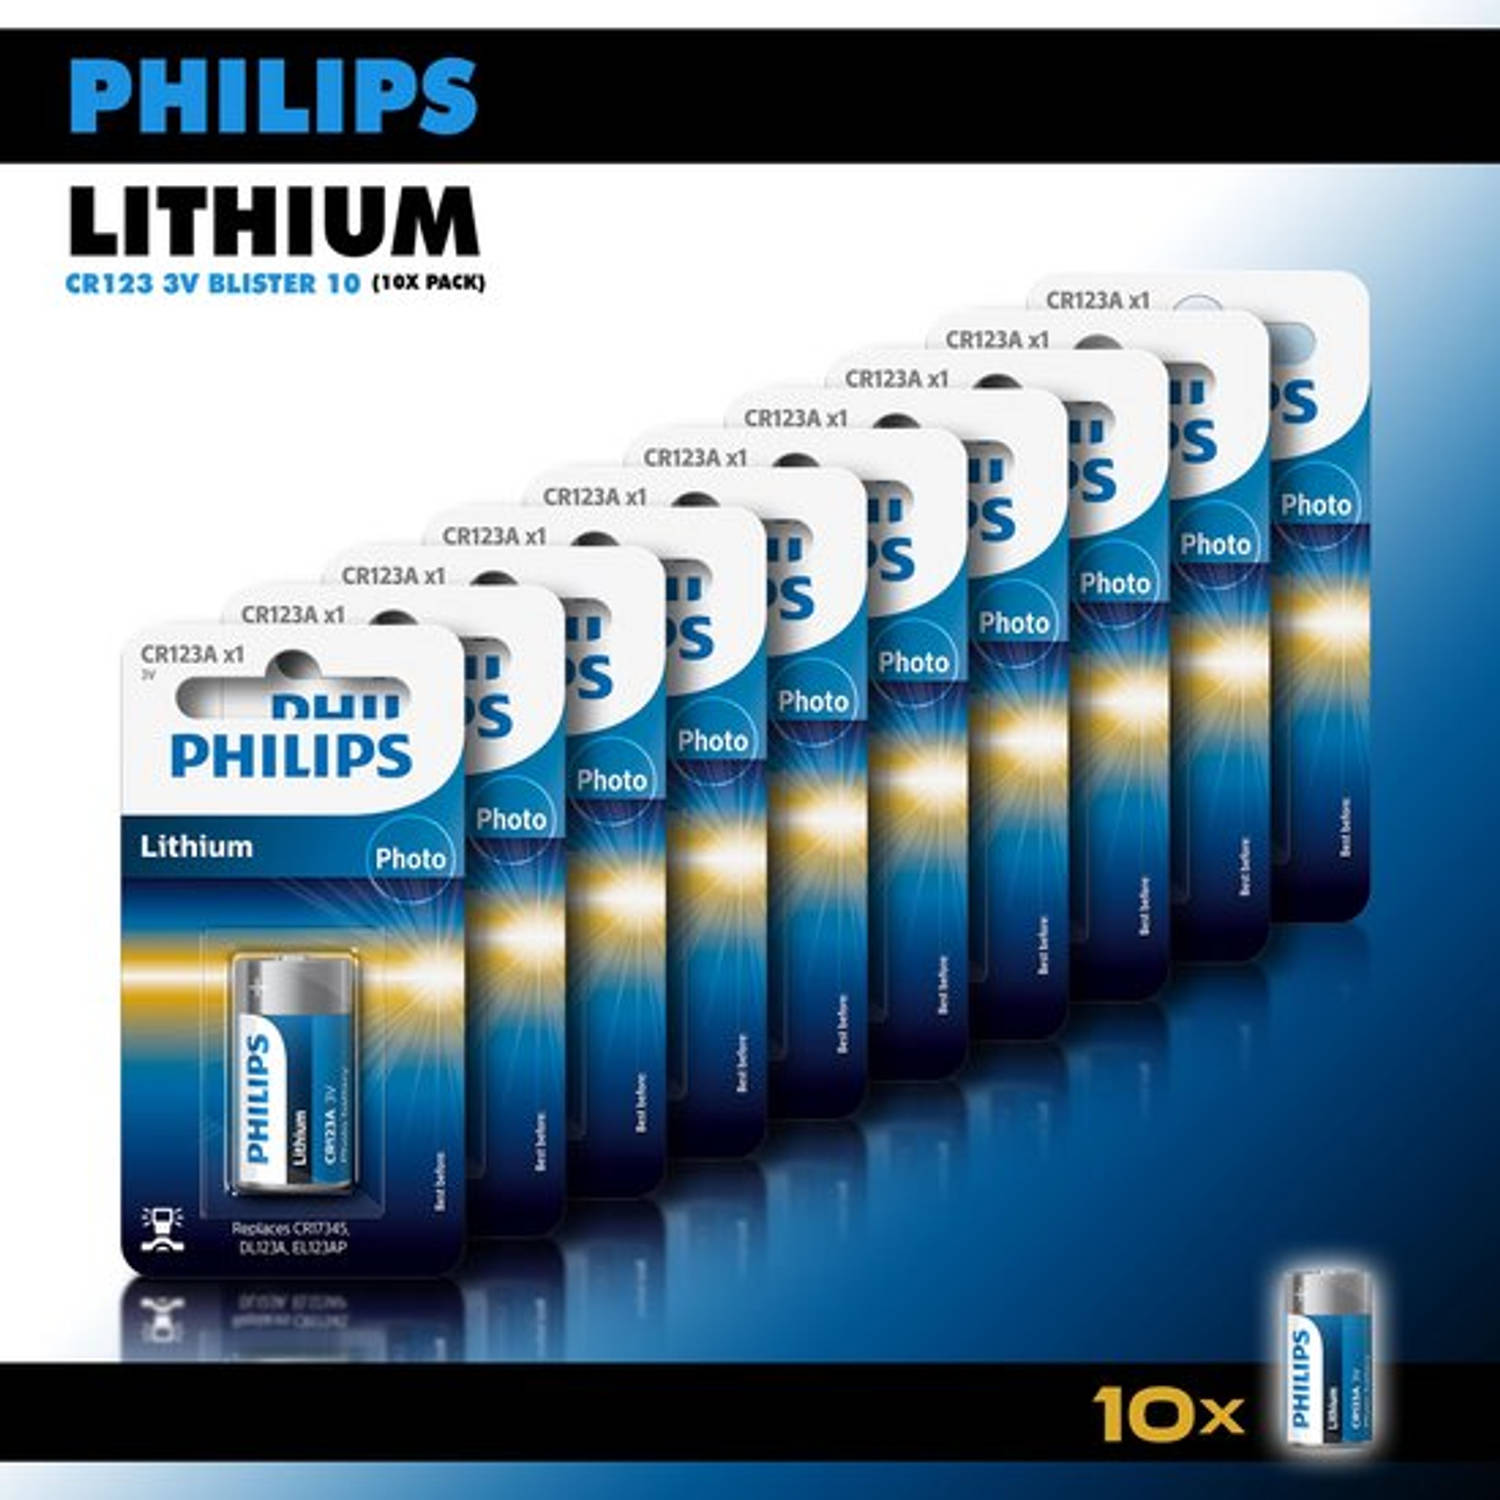 Philips Lithium 3V batterijen CR123 - fotocamera batterij - 1500 mAh - Knoopcellen - 10 stuks